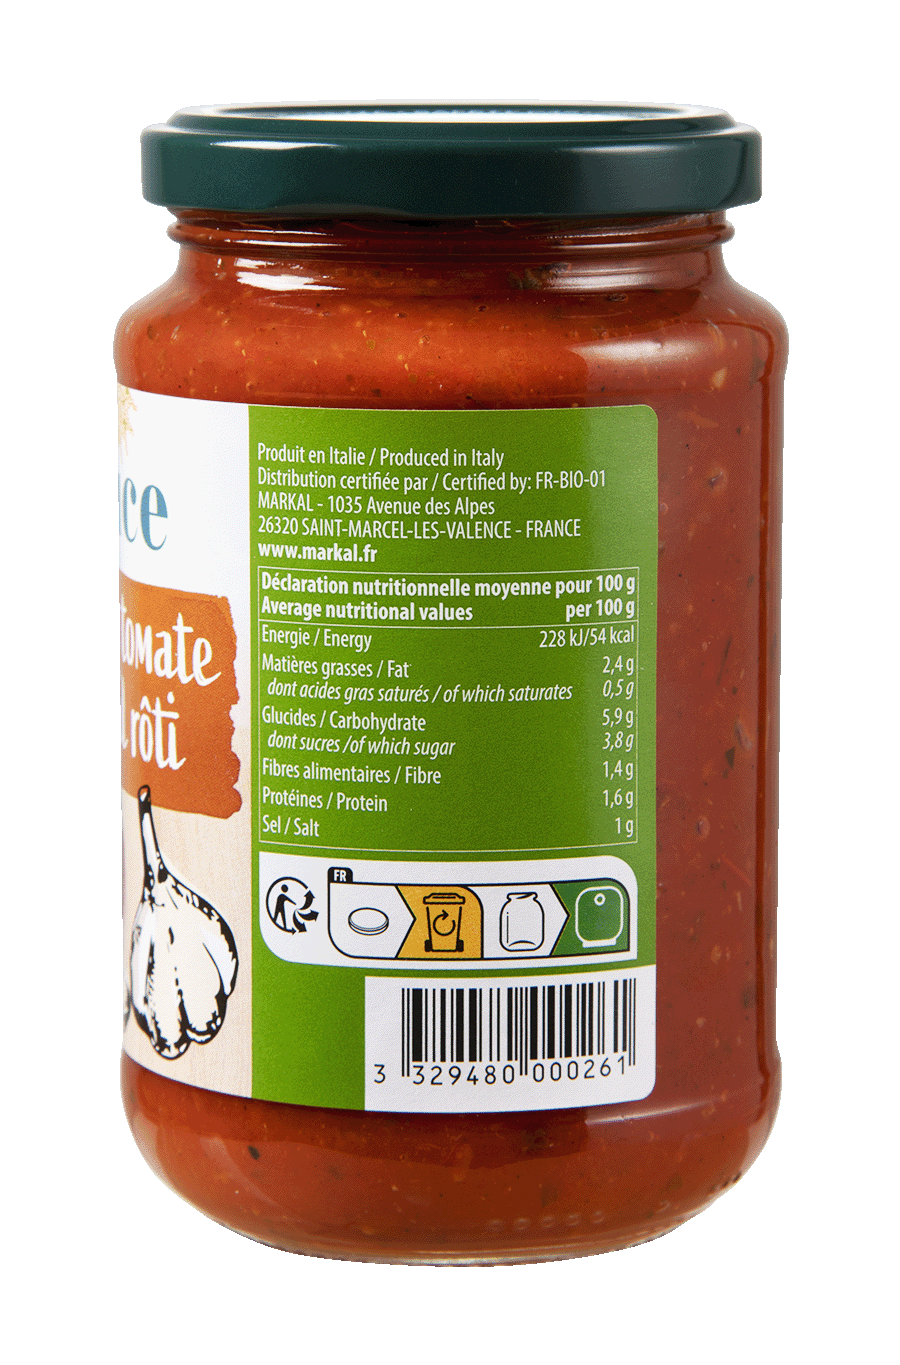 Roasted garlic tomato sauce